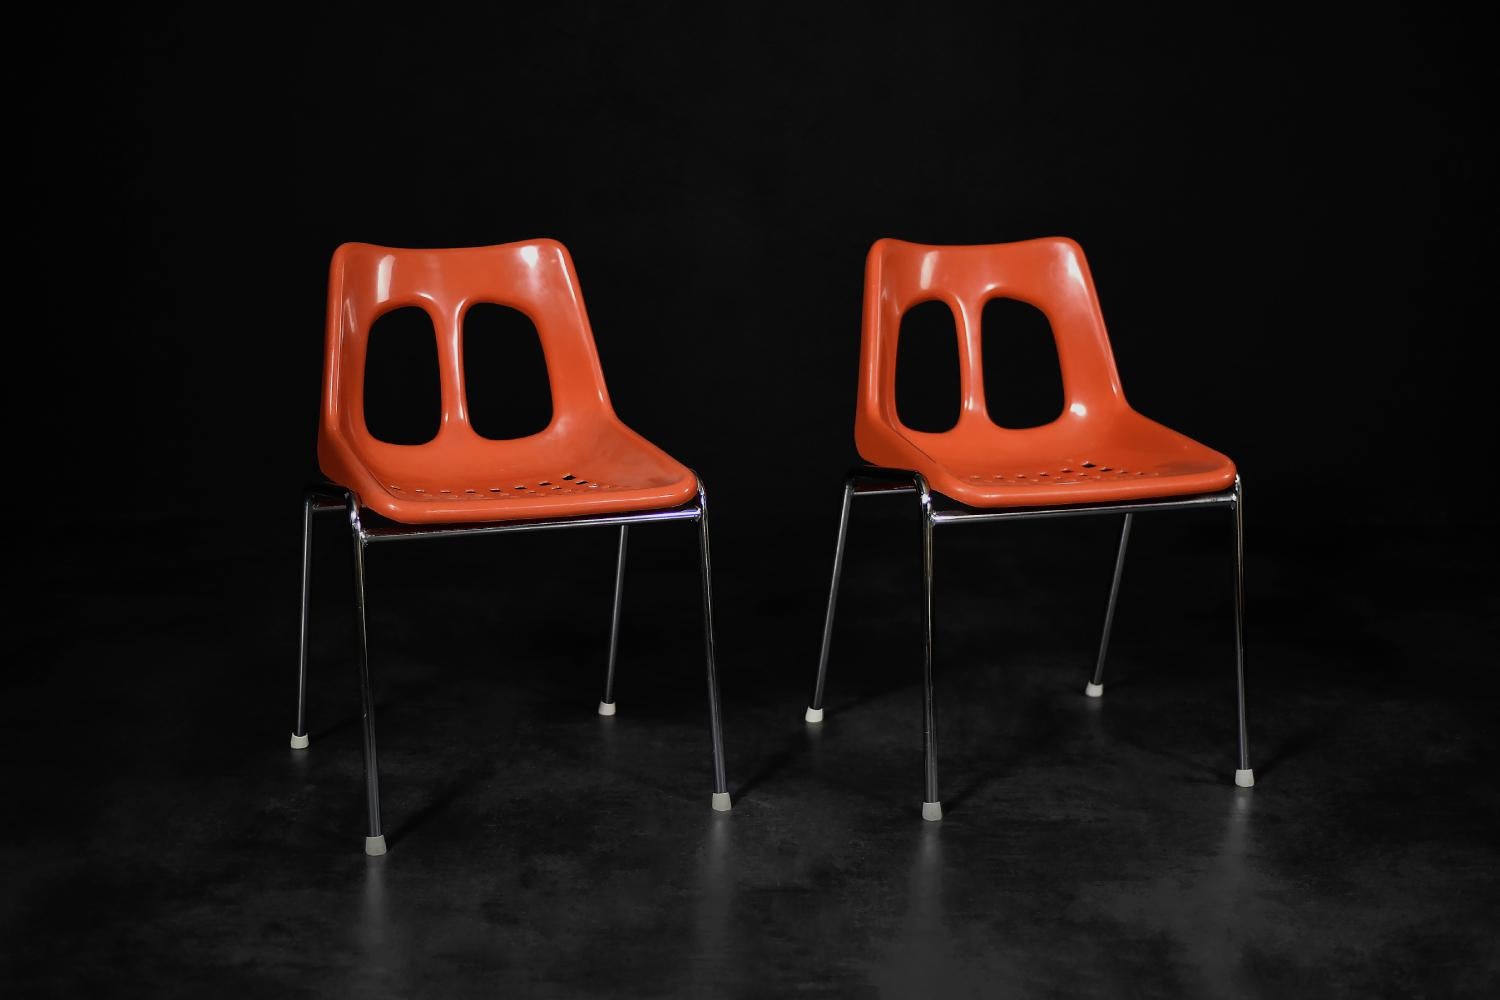 Pair of Mid-Century Modern Israeli Orange Plastic & Chrome Chair from Plasson For Sale 4